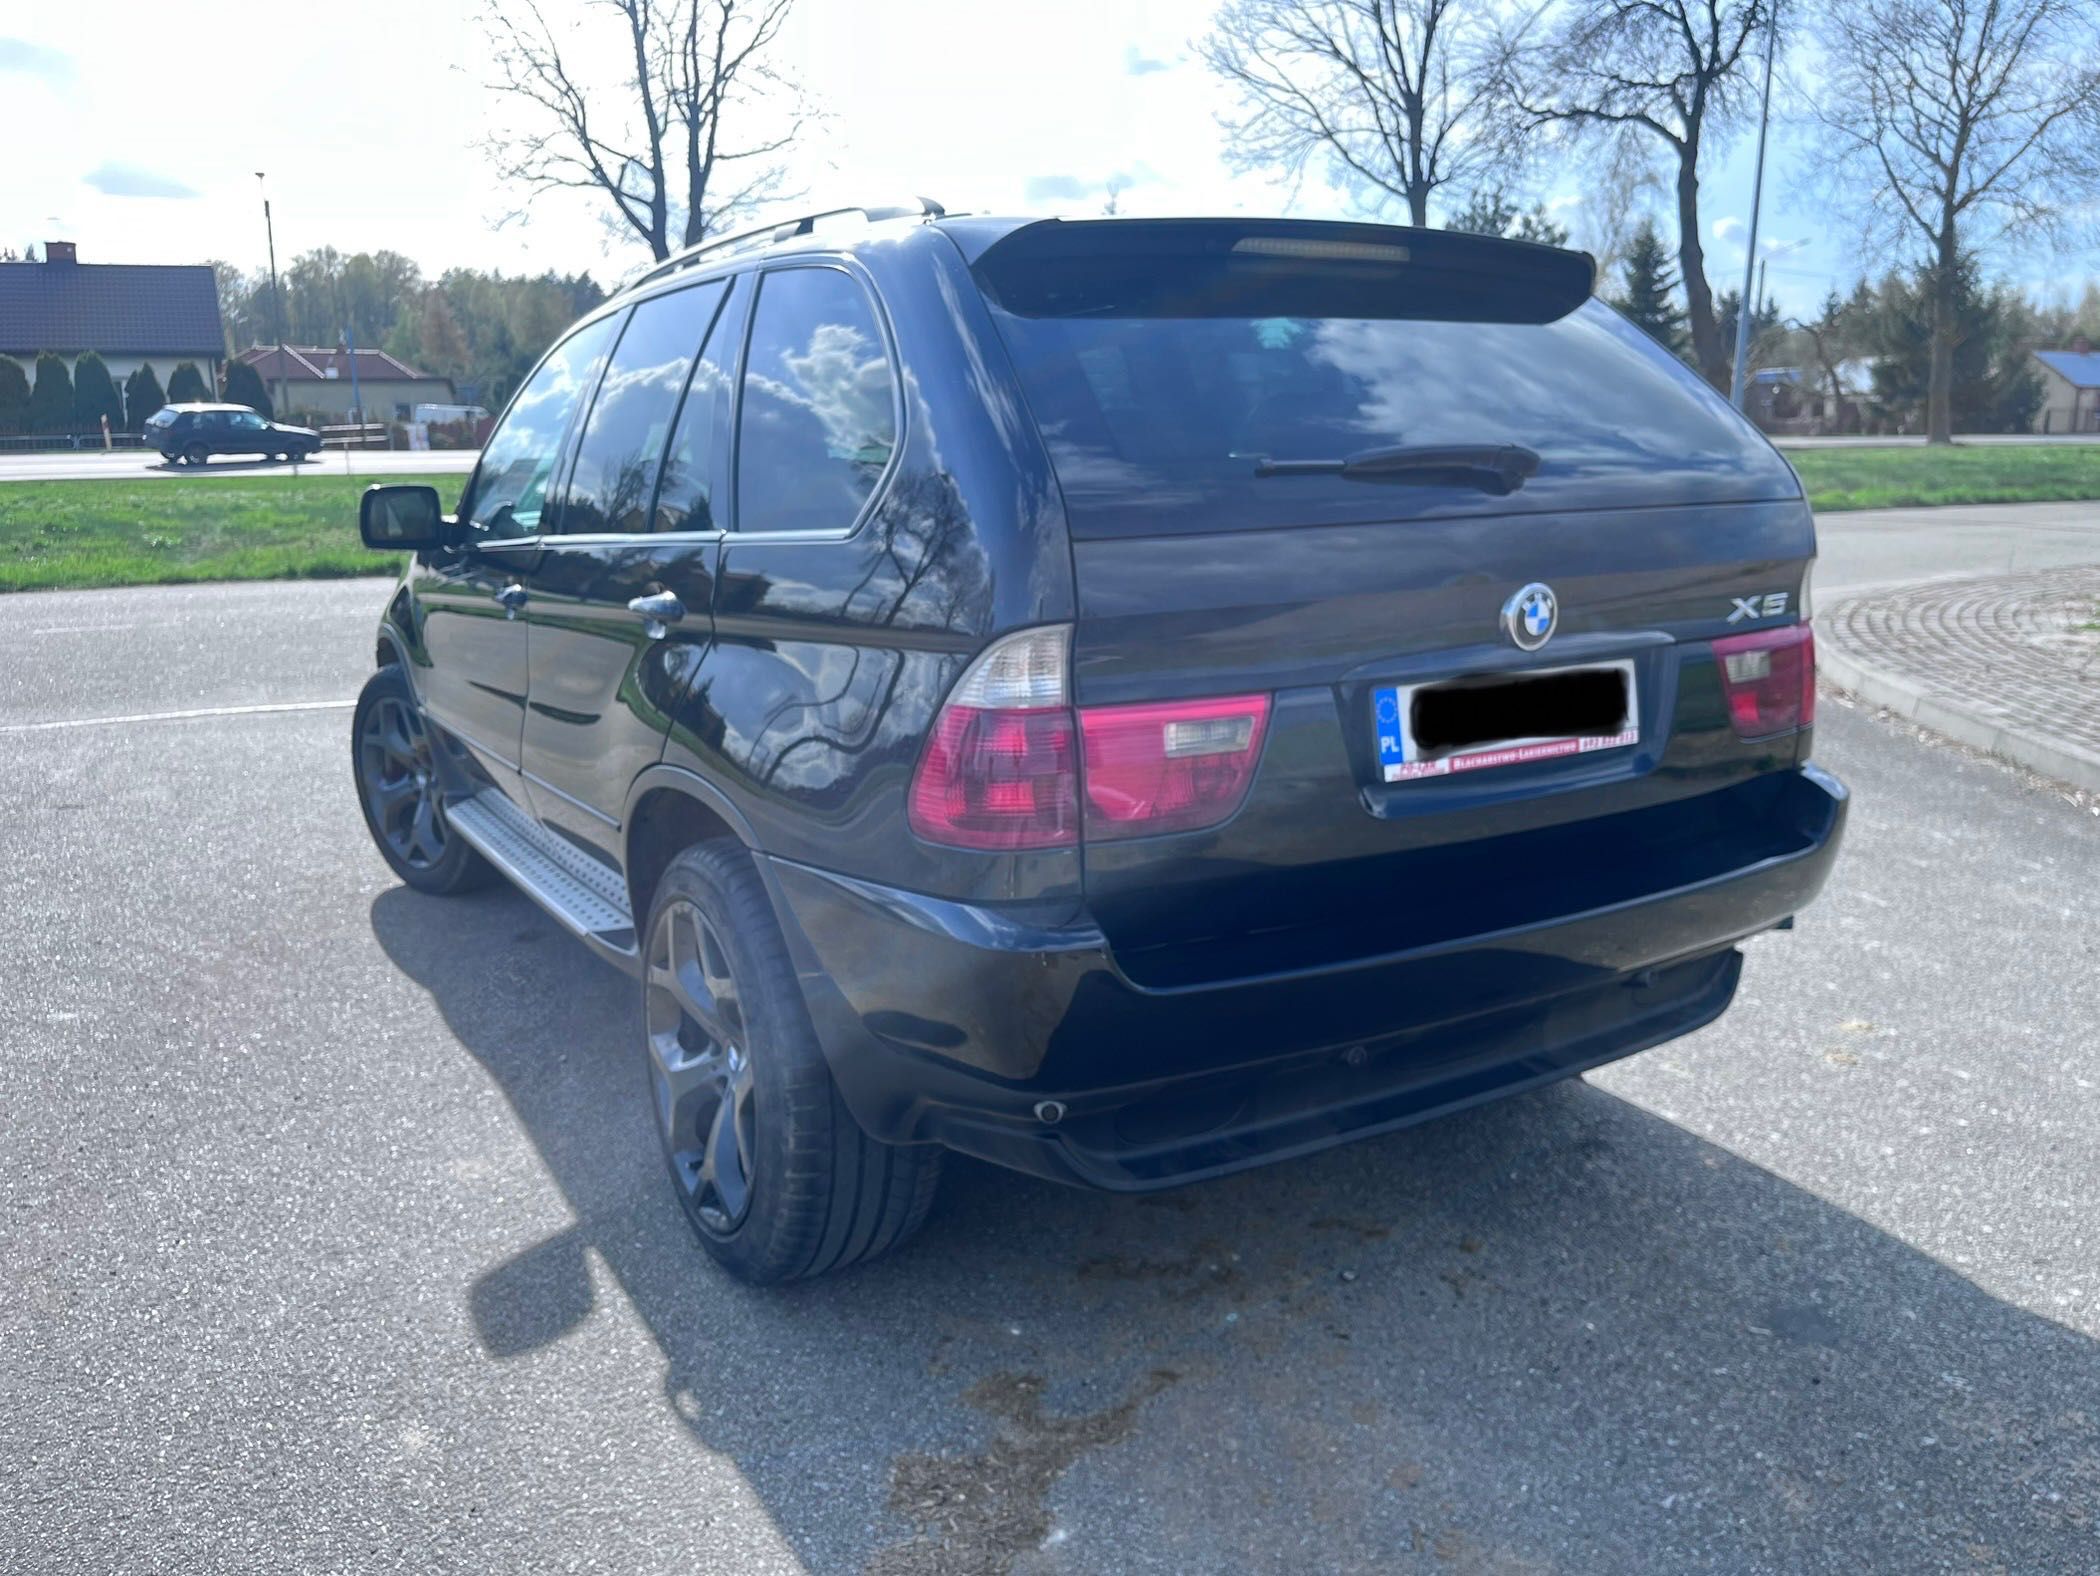 BMW x5 e53 3.0d Panorama Alu 20” Sport pakiet.